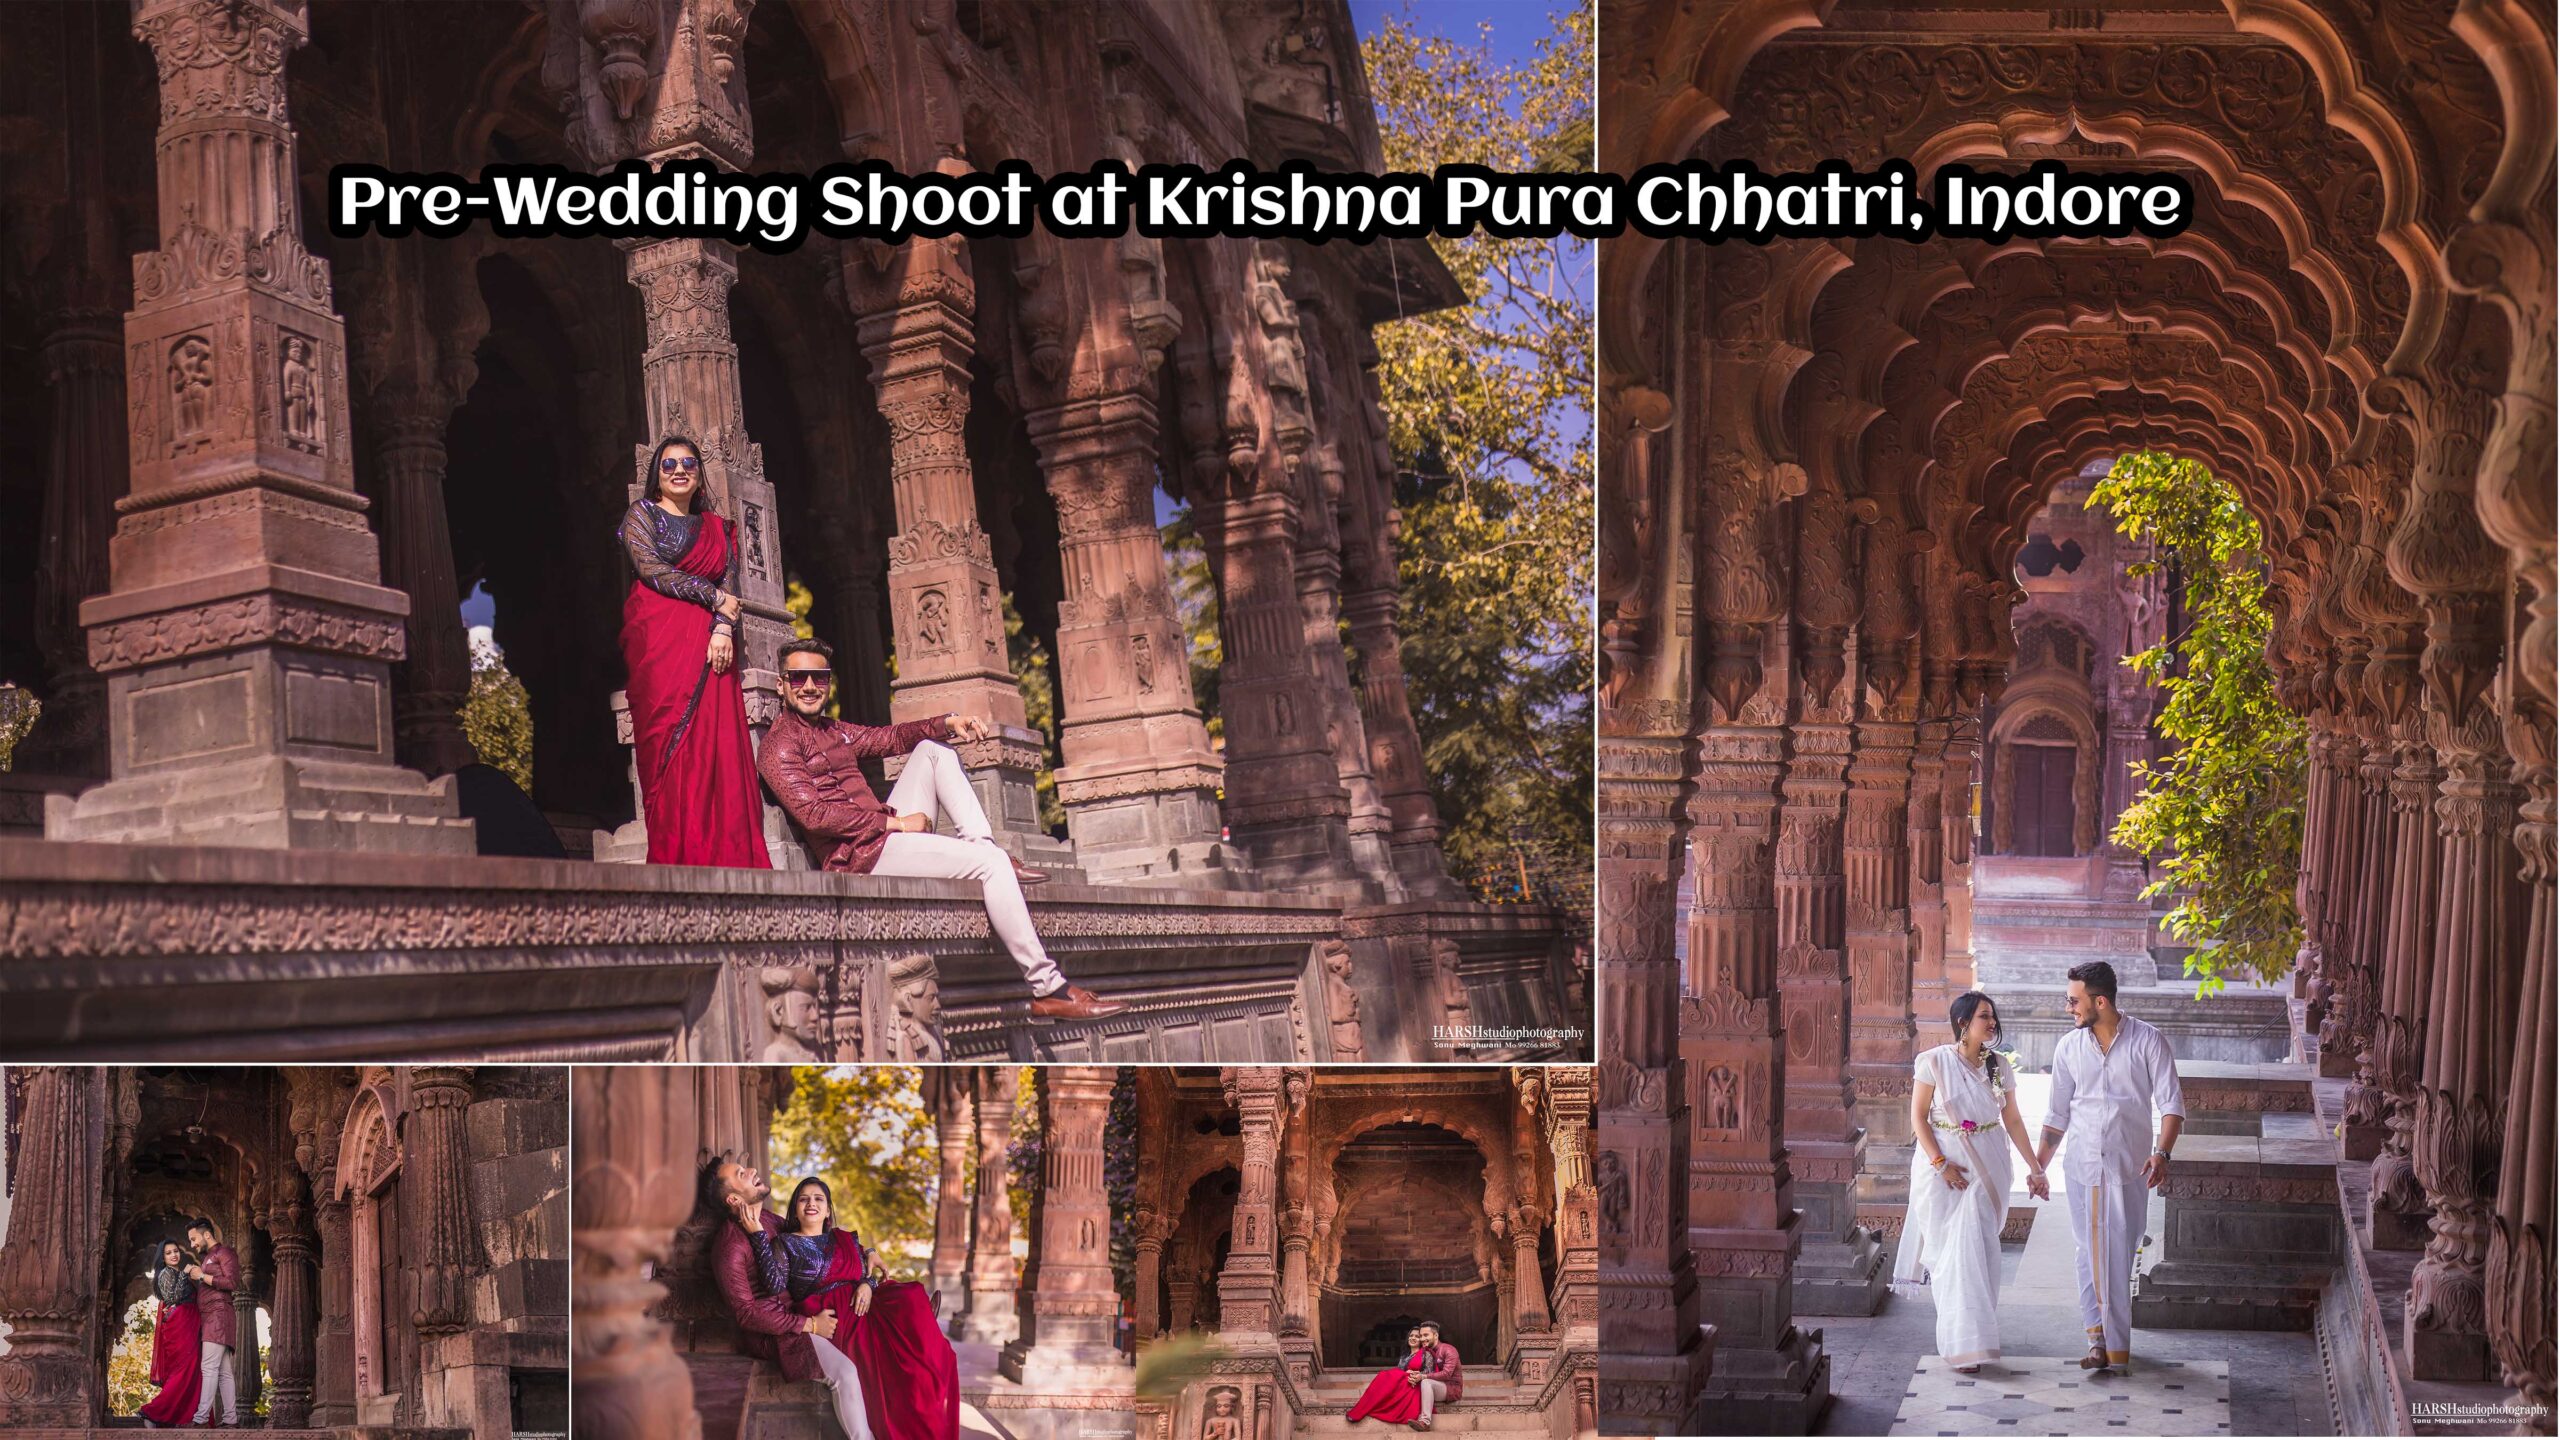 Pre-Wedding Shoot at Krishna Pura Chhatri in Indore with Maratha-style Architecture